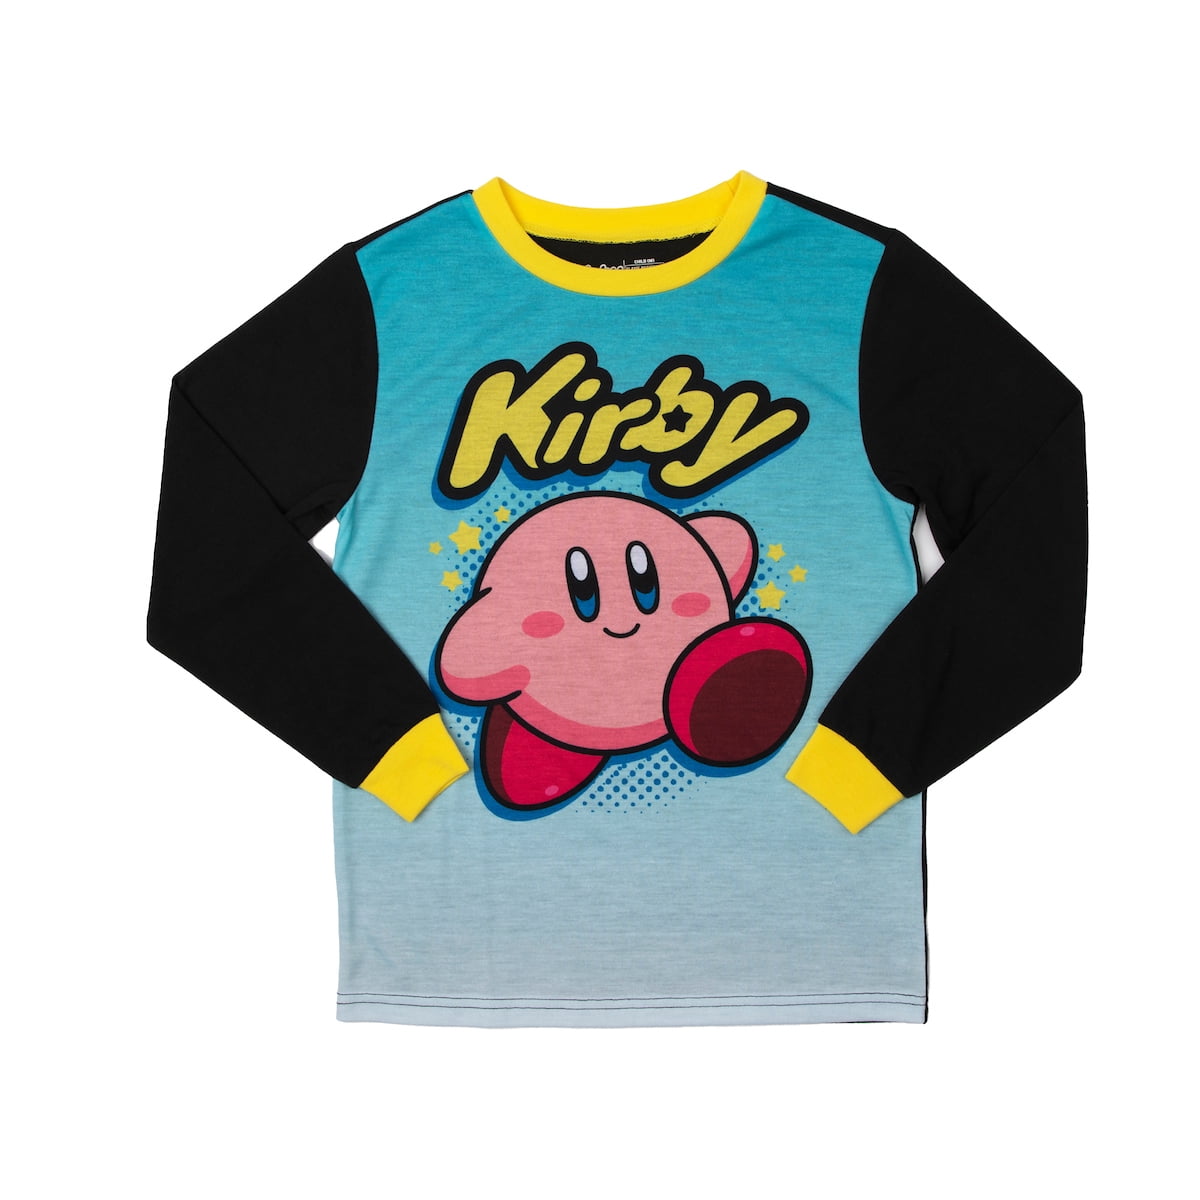 Sleeping rick - Kirby - Kids T-Shirt